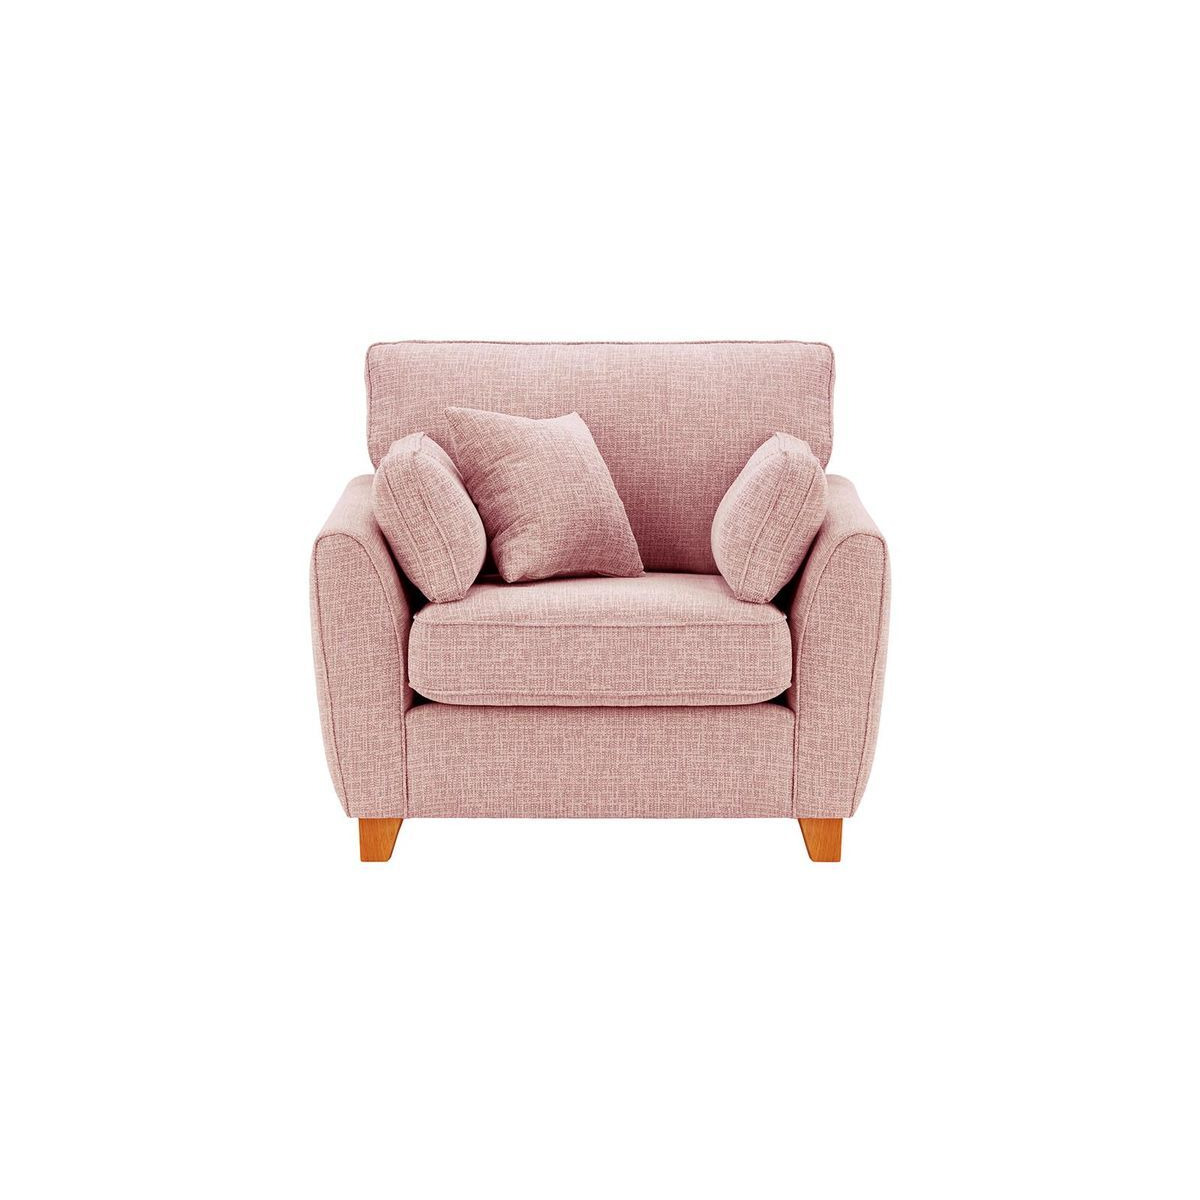 James Armchair, blush pink, Leg colour: aveo - image 1